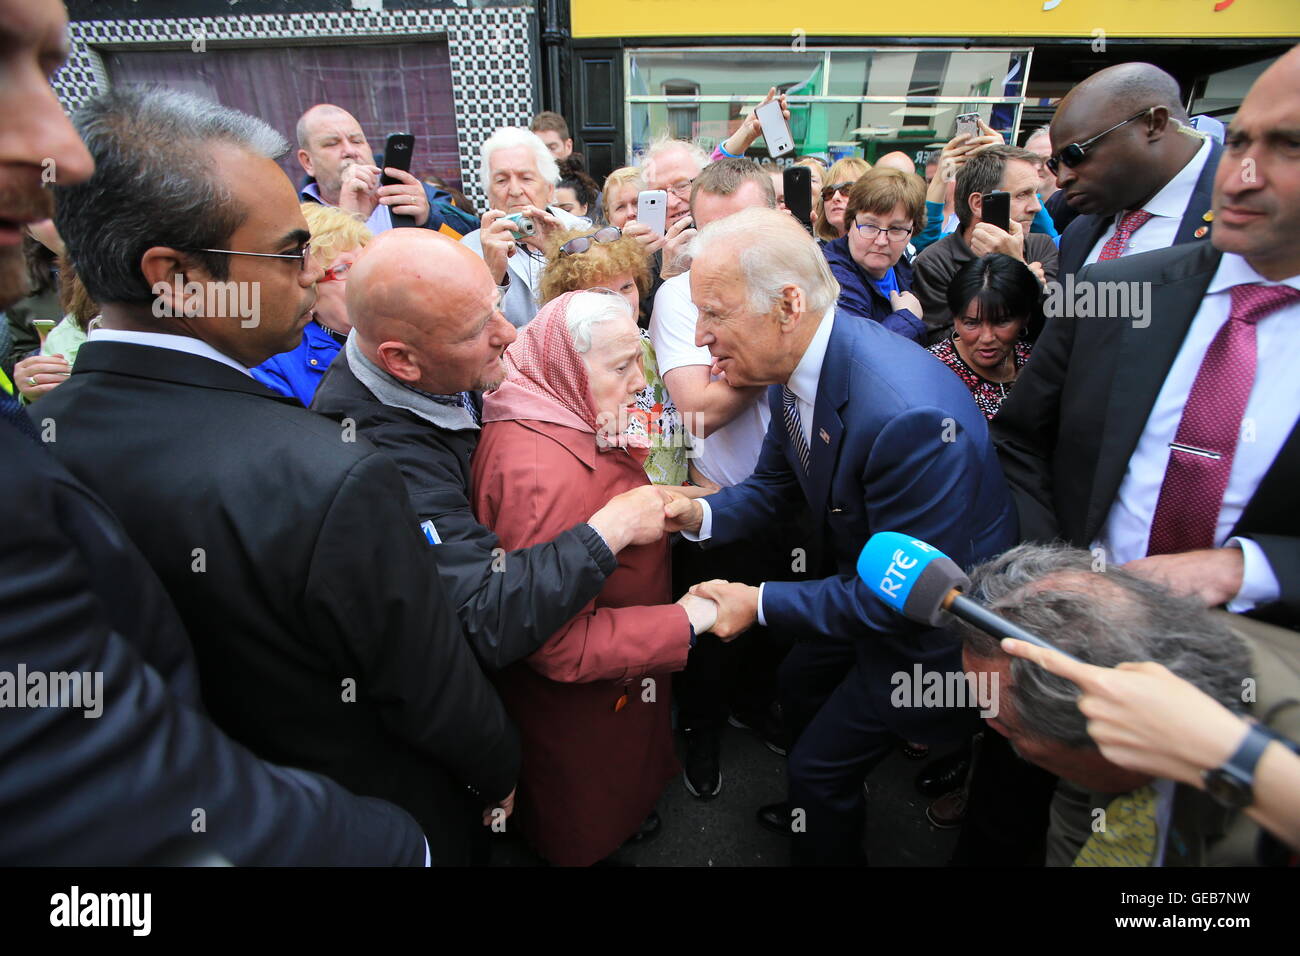 Joe Biden, Vice President of the United States tours with Enda Kenny the Irish Prime Minister (Taoiseach), the towns of Ballina, Stock Photo